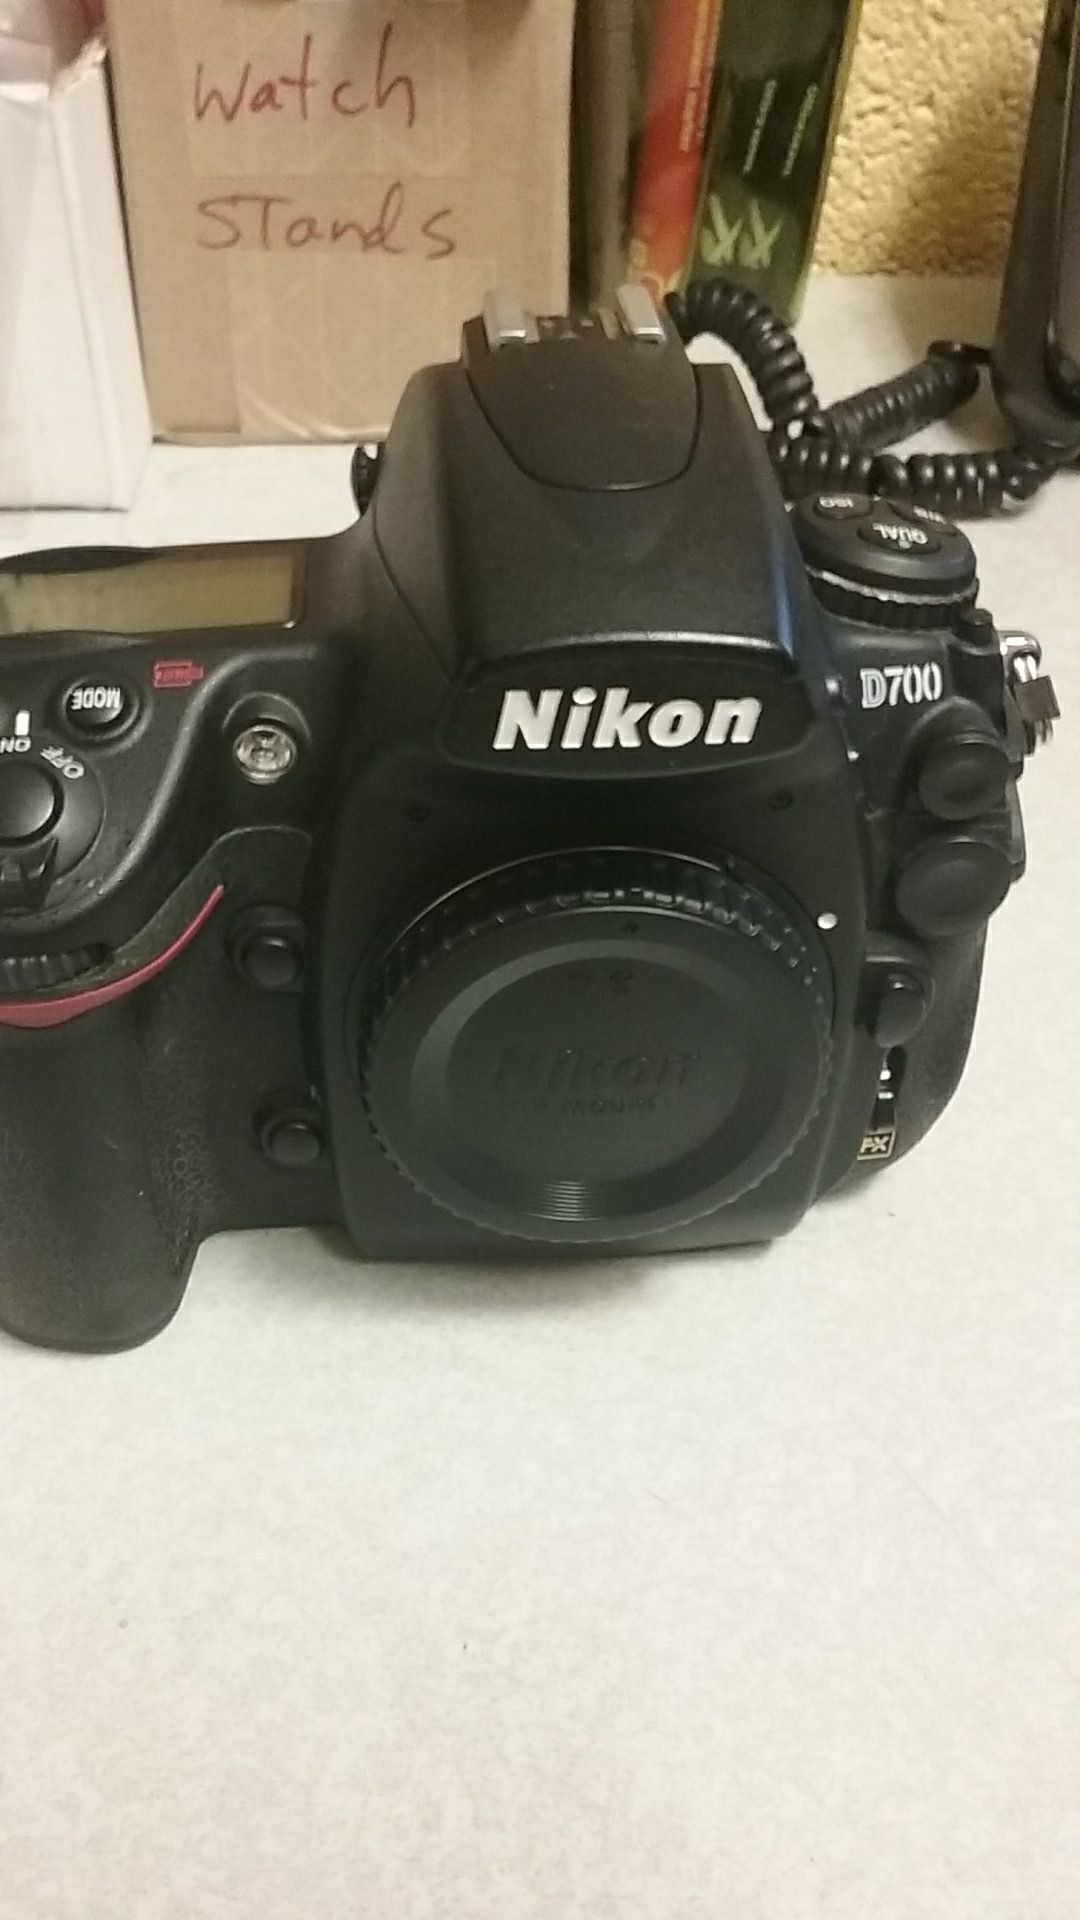 Nikon D700 digital SLR camera